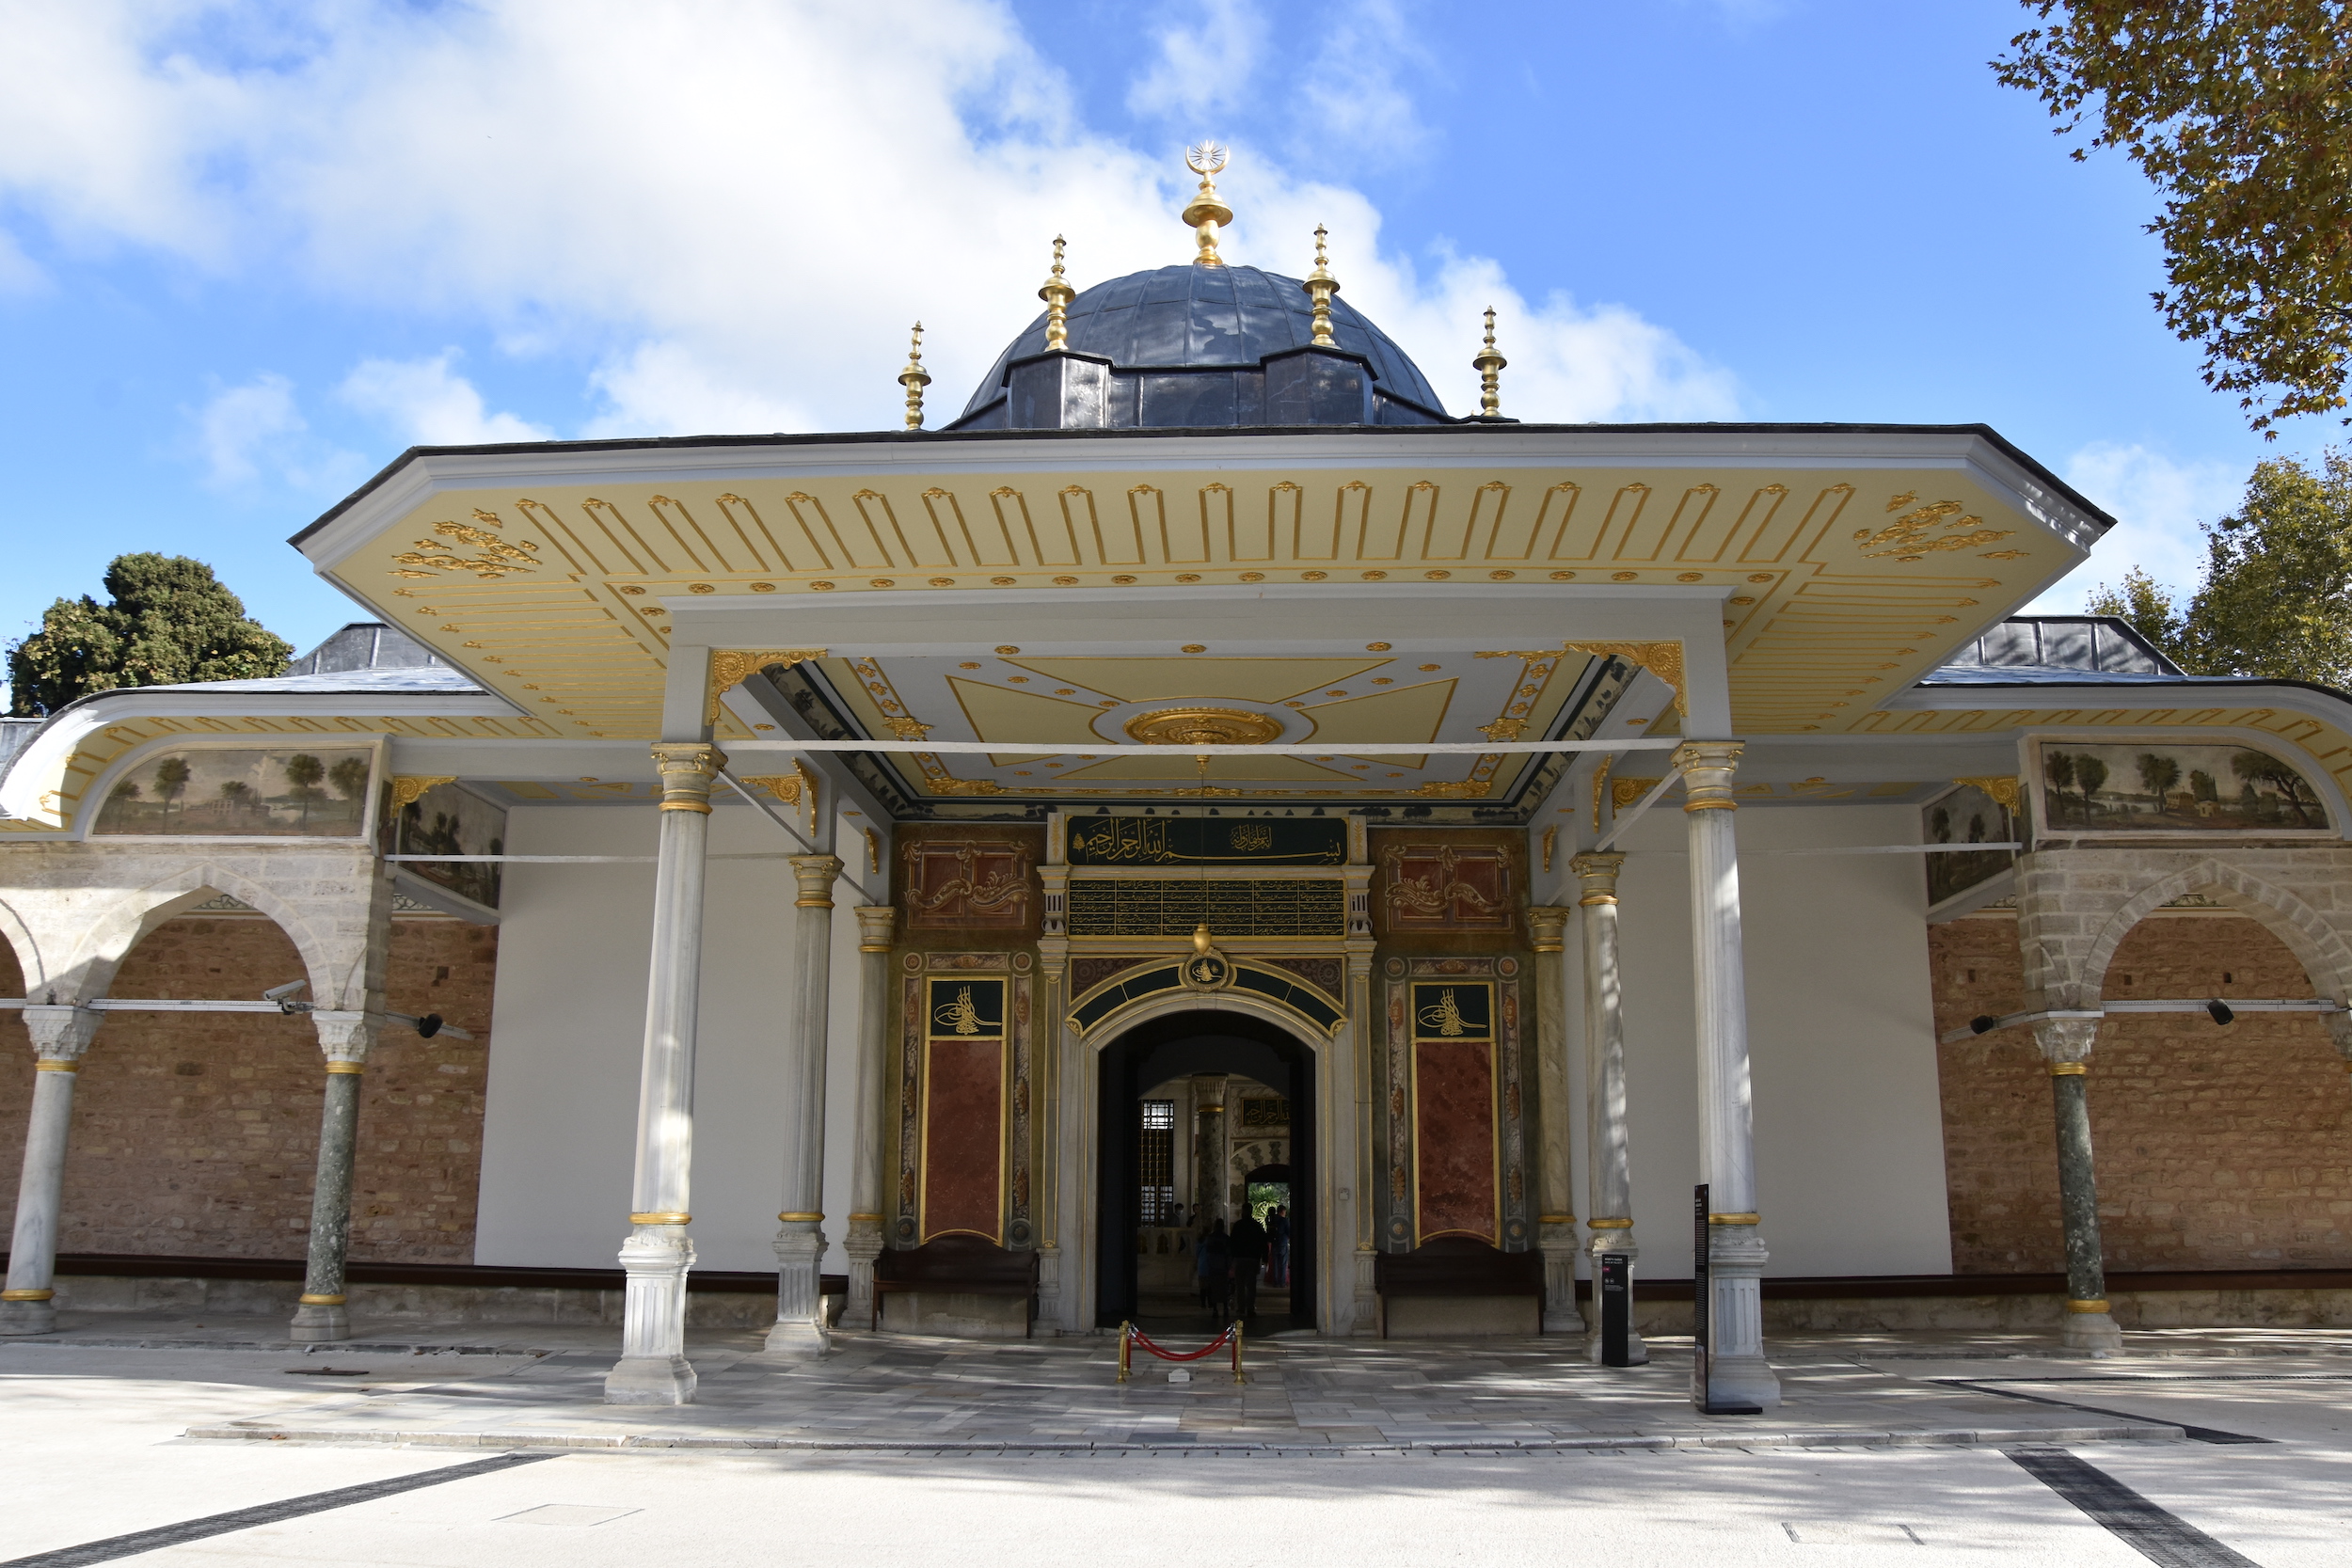 The Gate of Felicity, Topkapi Palace